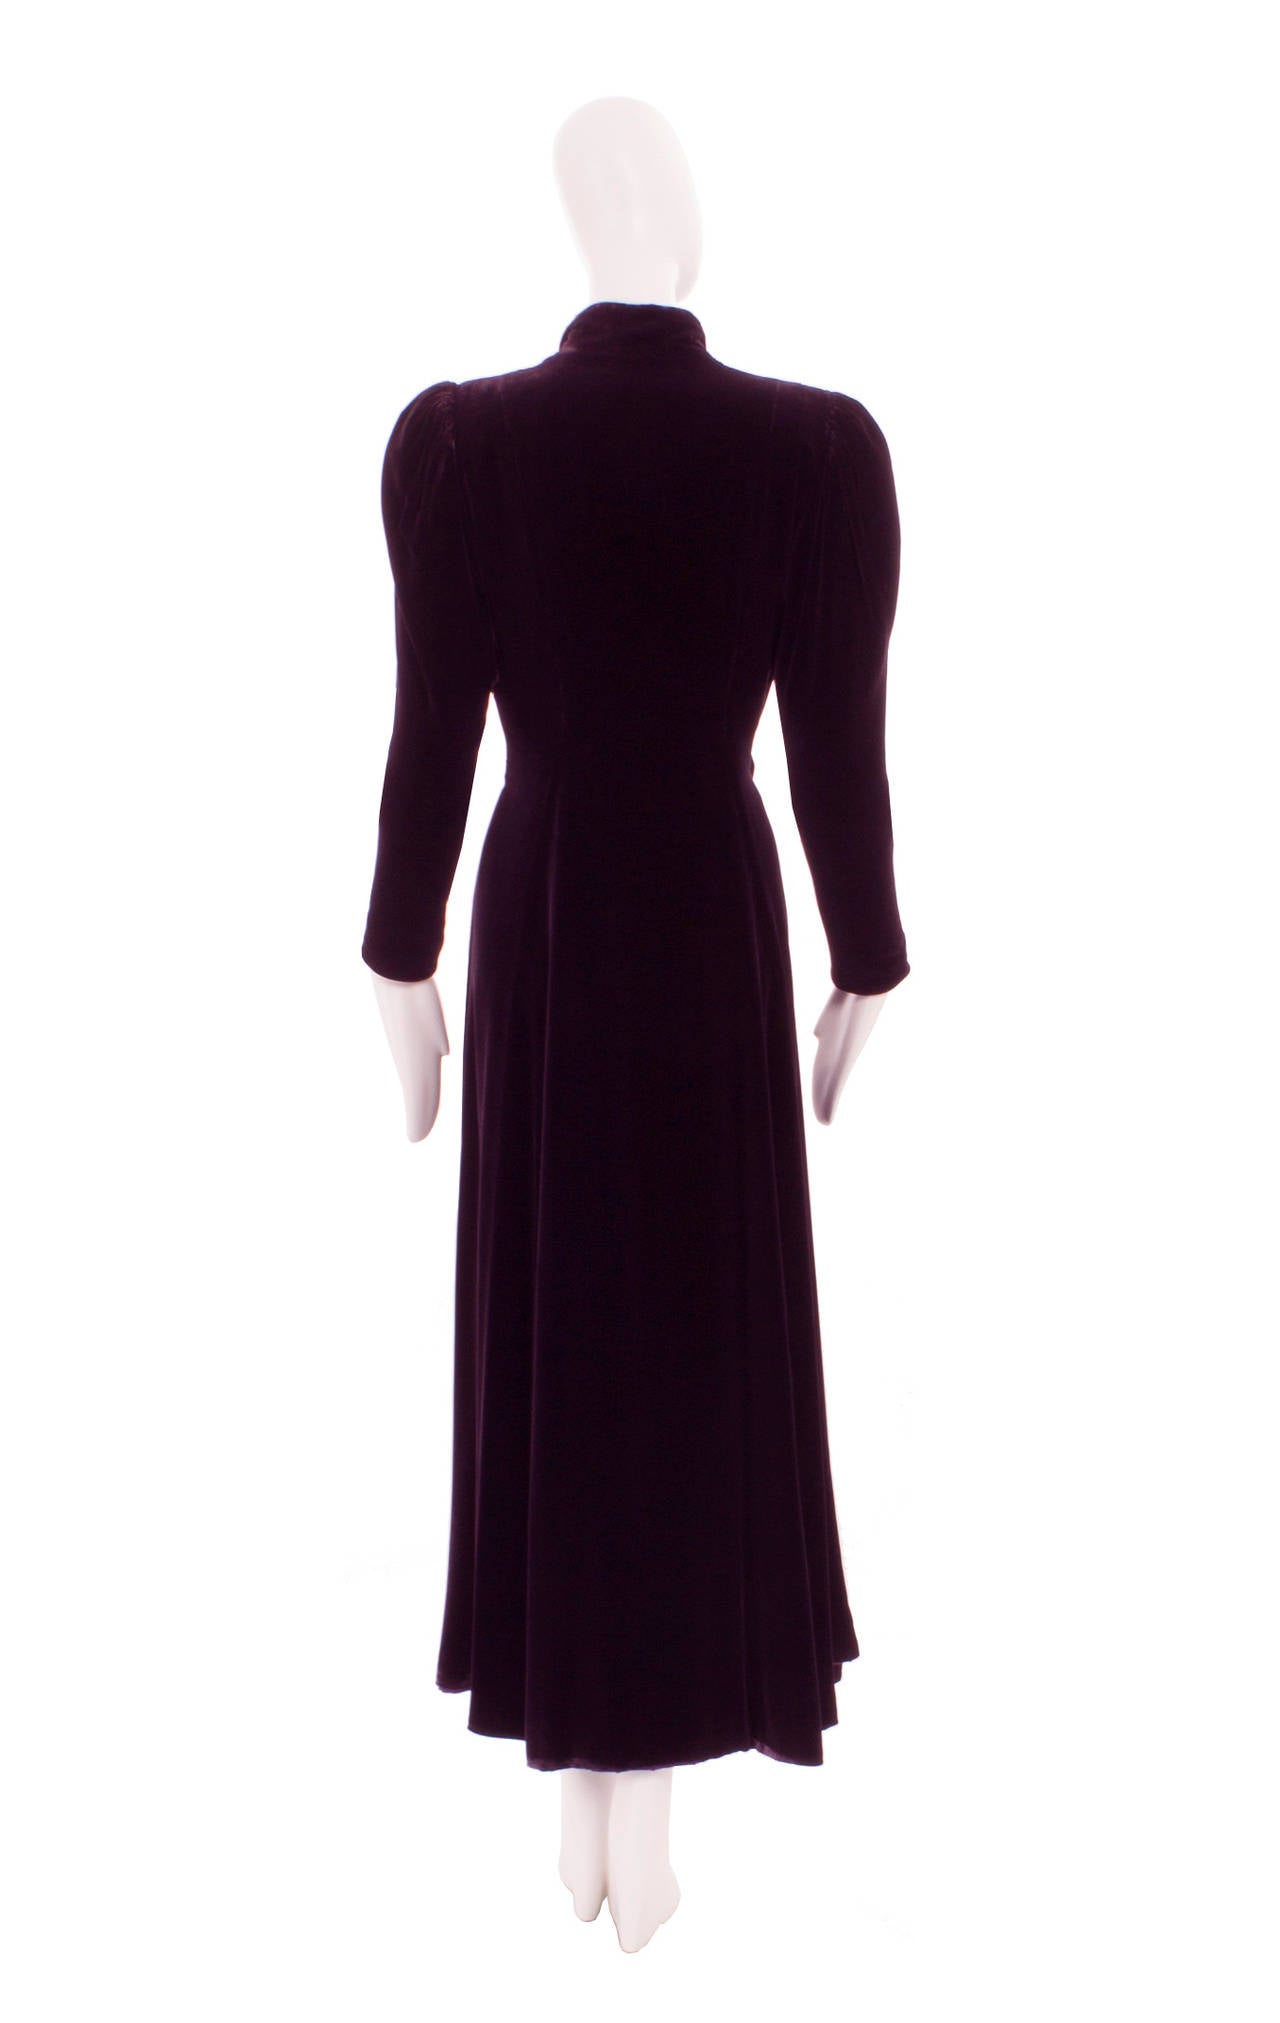 Valentina purple velvet coat, circa 1932 For Sale at 1stdibs